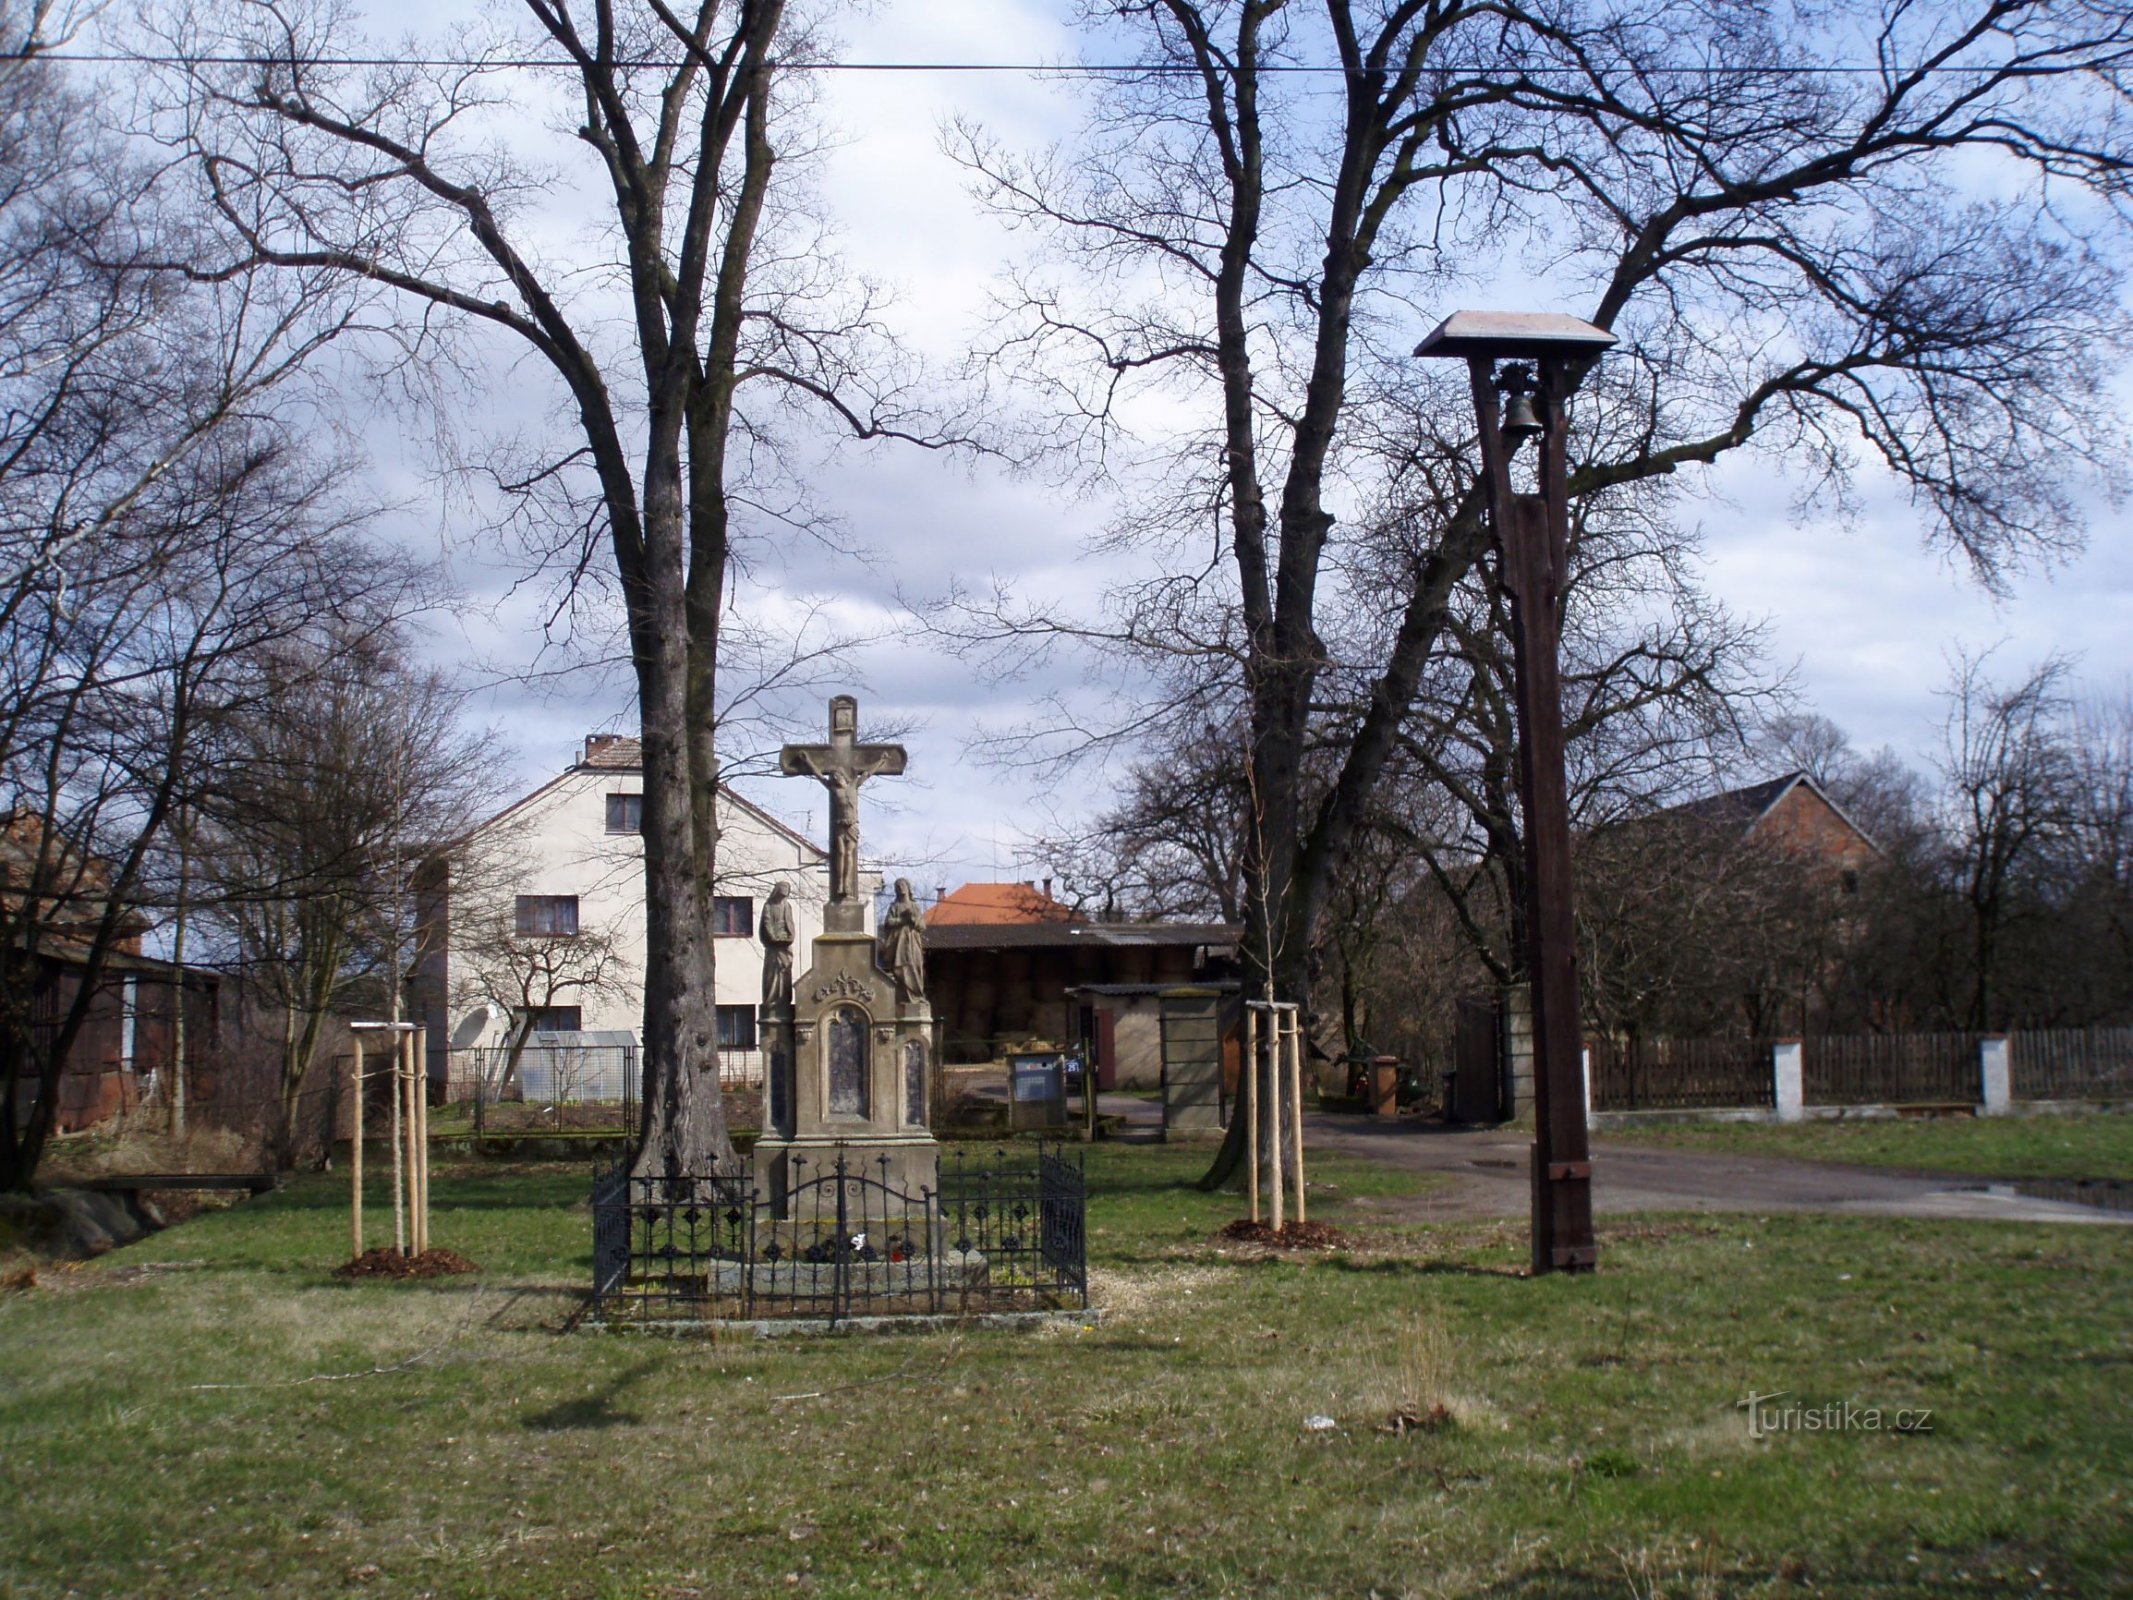 Thánh giá và tháp chuông ở Piletice (Hradec Králové, 28.3.2009)